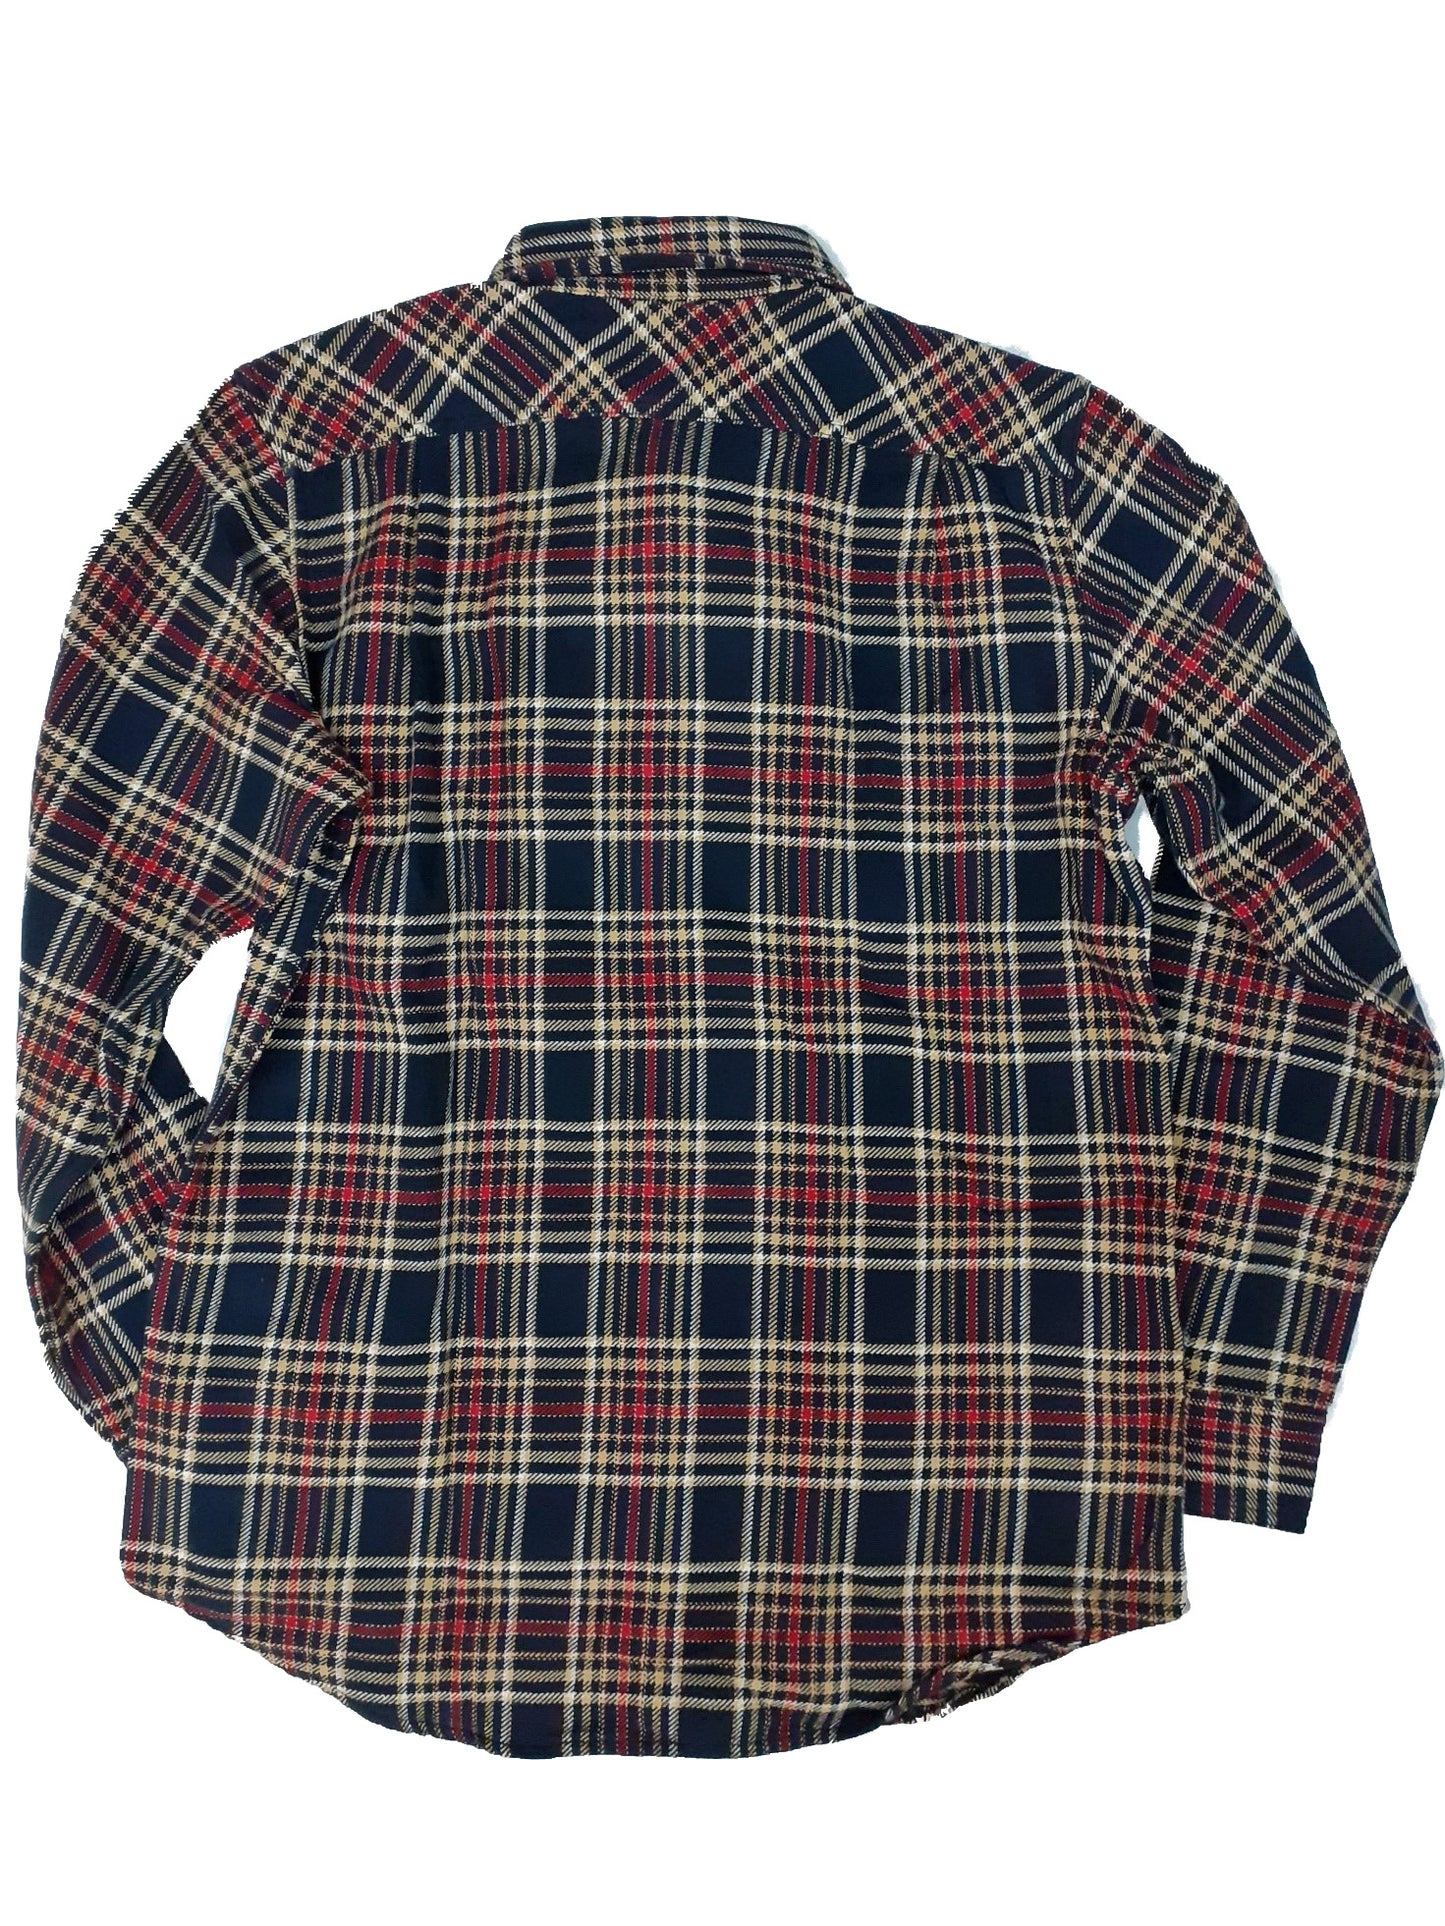 Filson FMCAM0016 409 Vintage Flannel Work Shirt